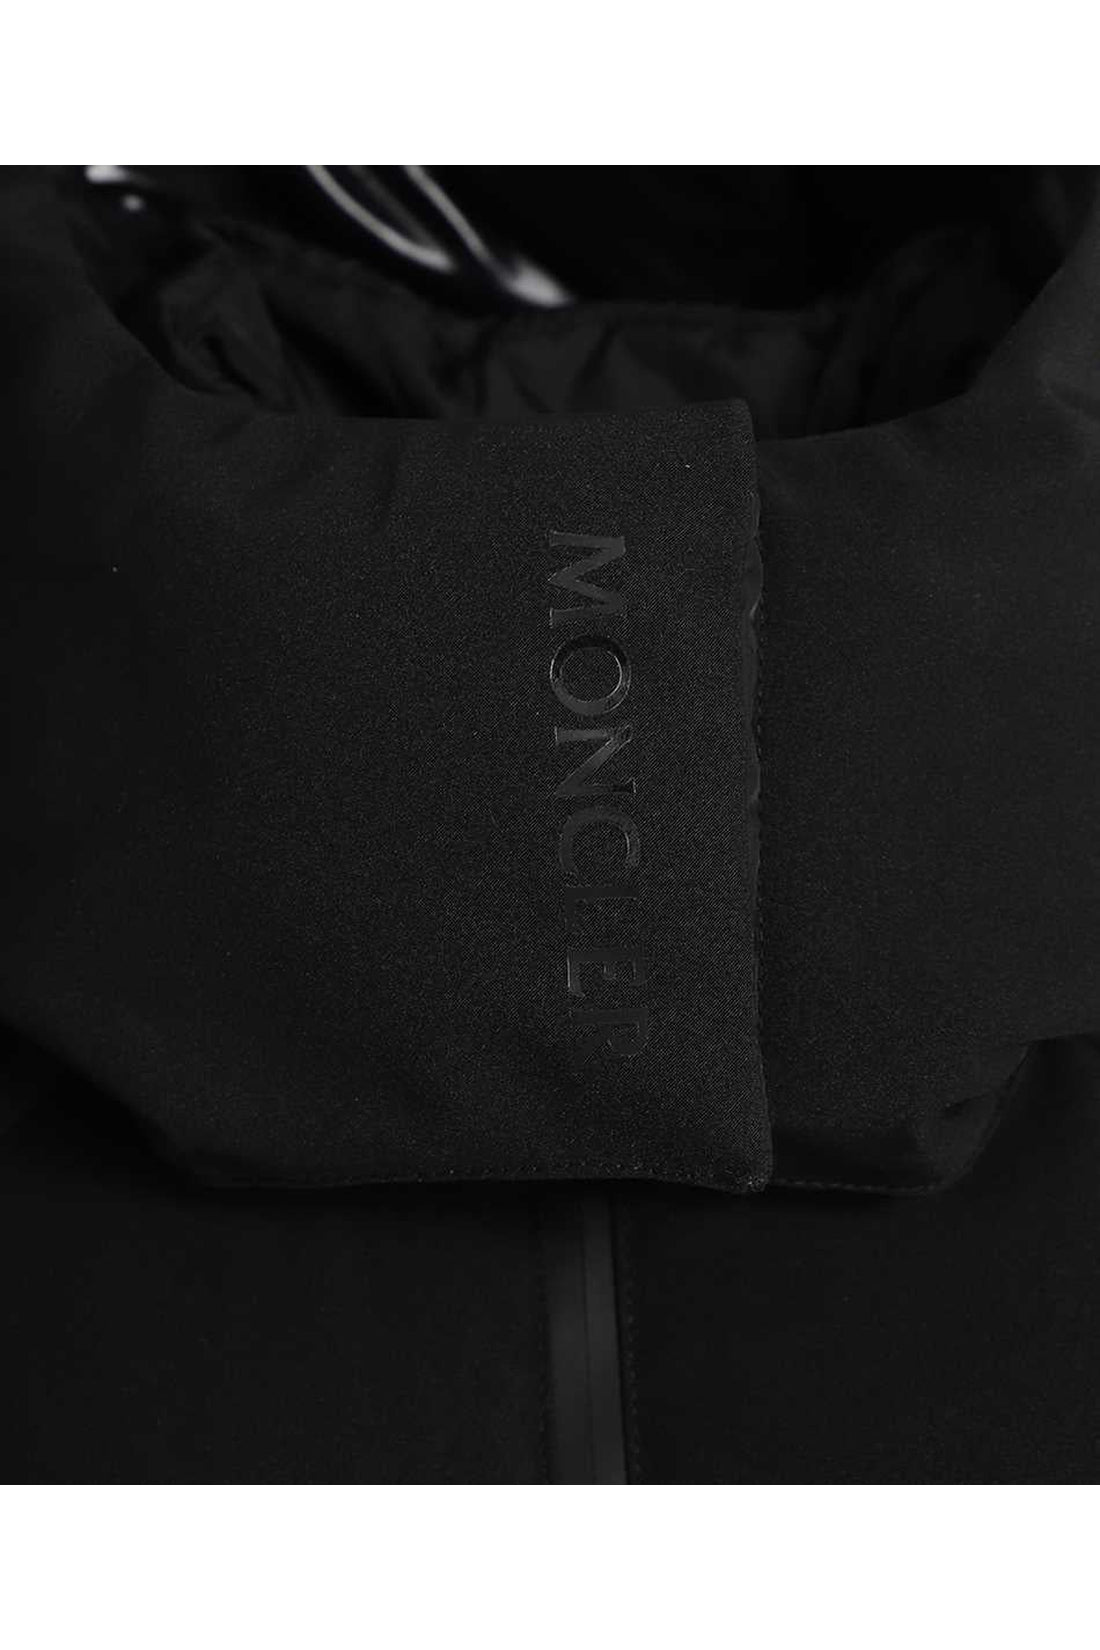 Moncler-OUTLET-SALE-Long hooded down jacket-ARCHIVIST